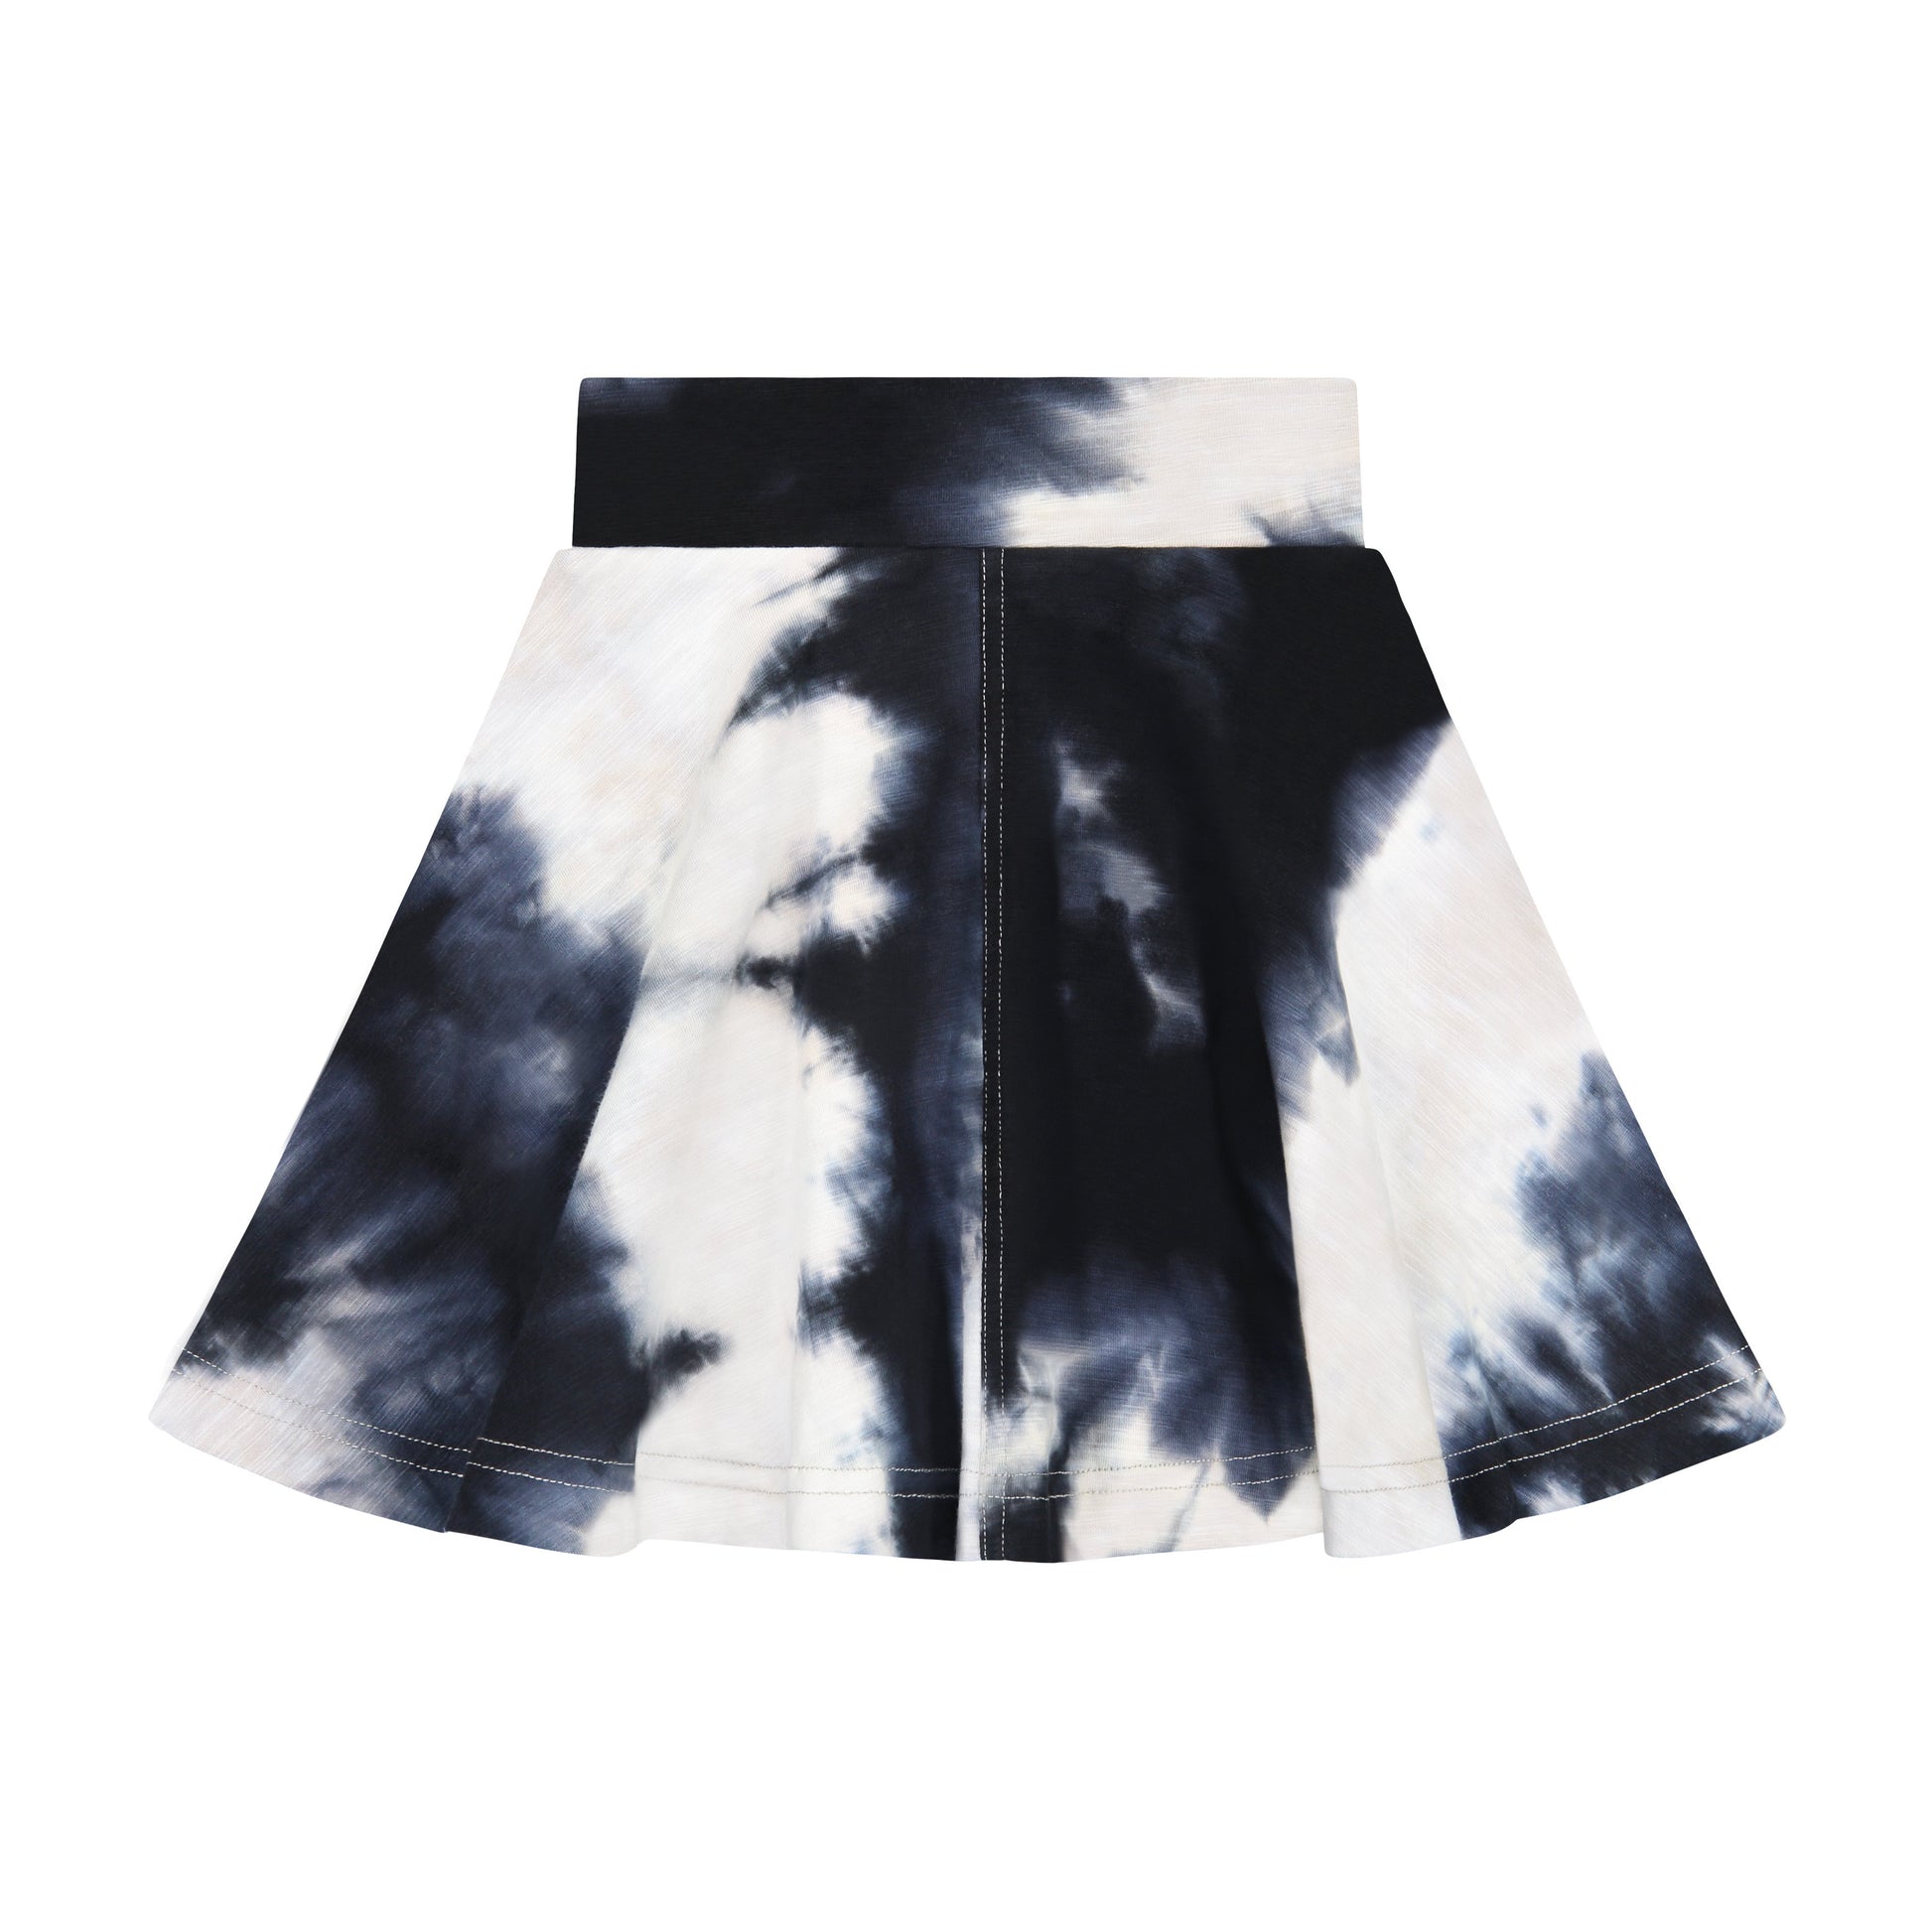 Teela Tie Dye Flair Skirt (4 colors) - Modest Necessities